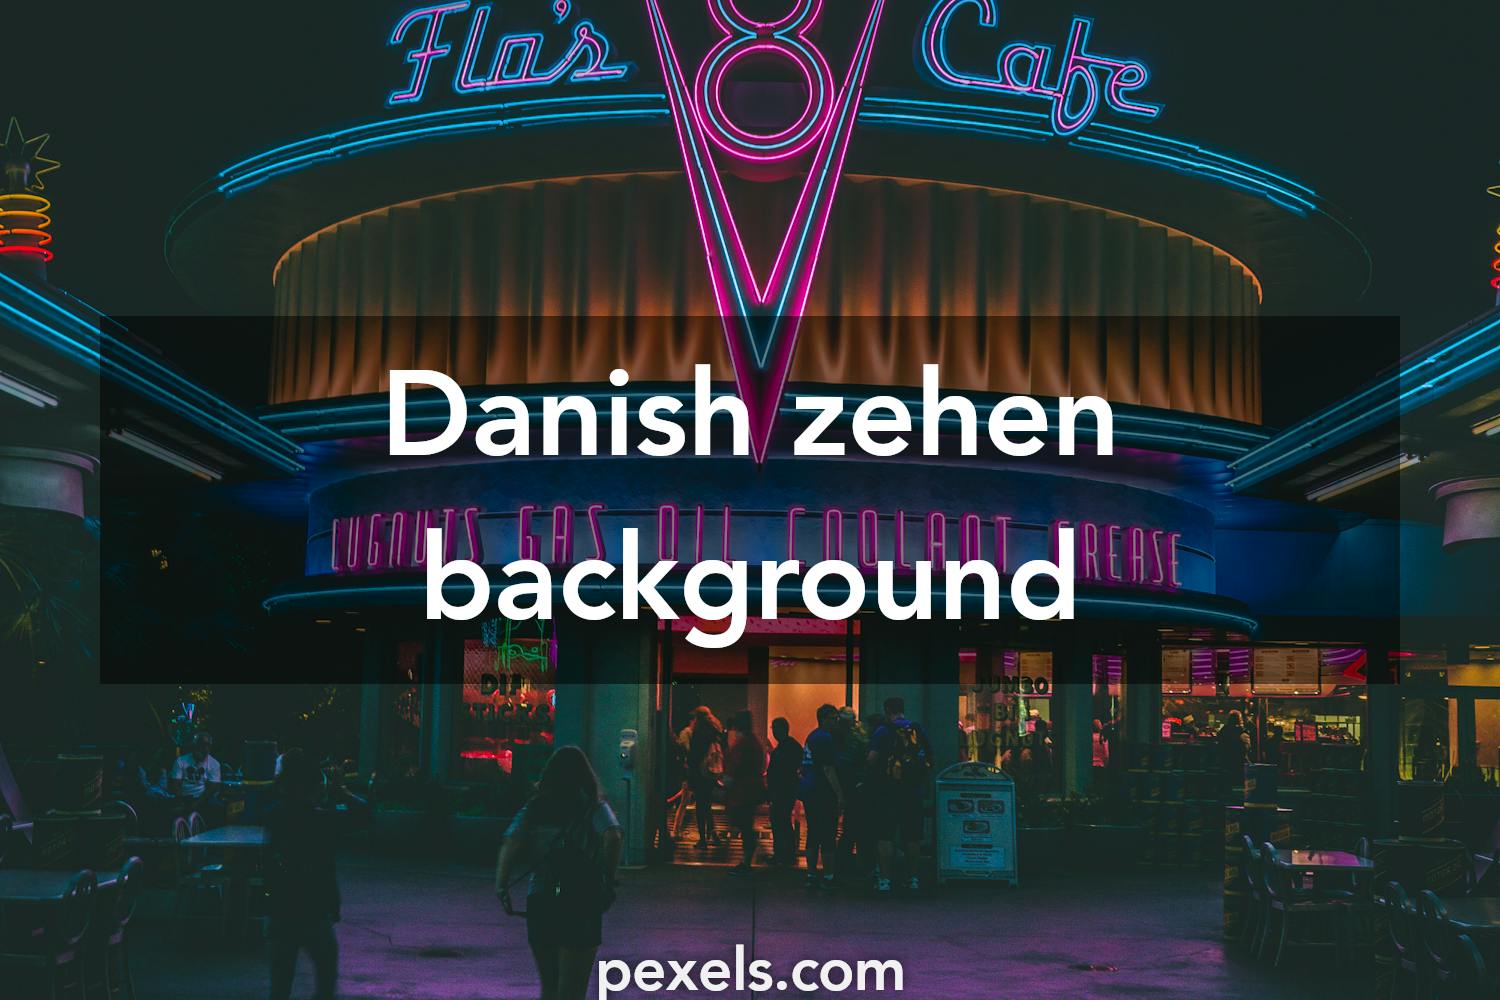 Danish zehen photo editing background download hd